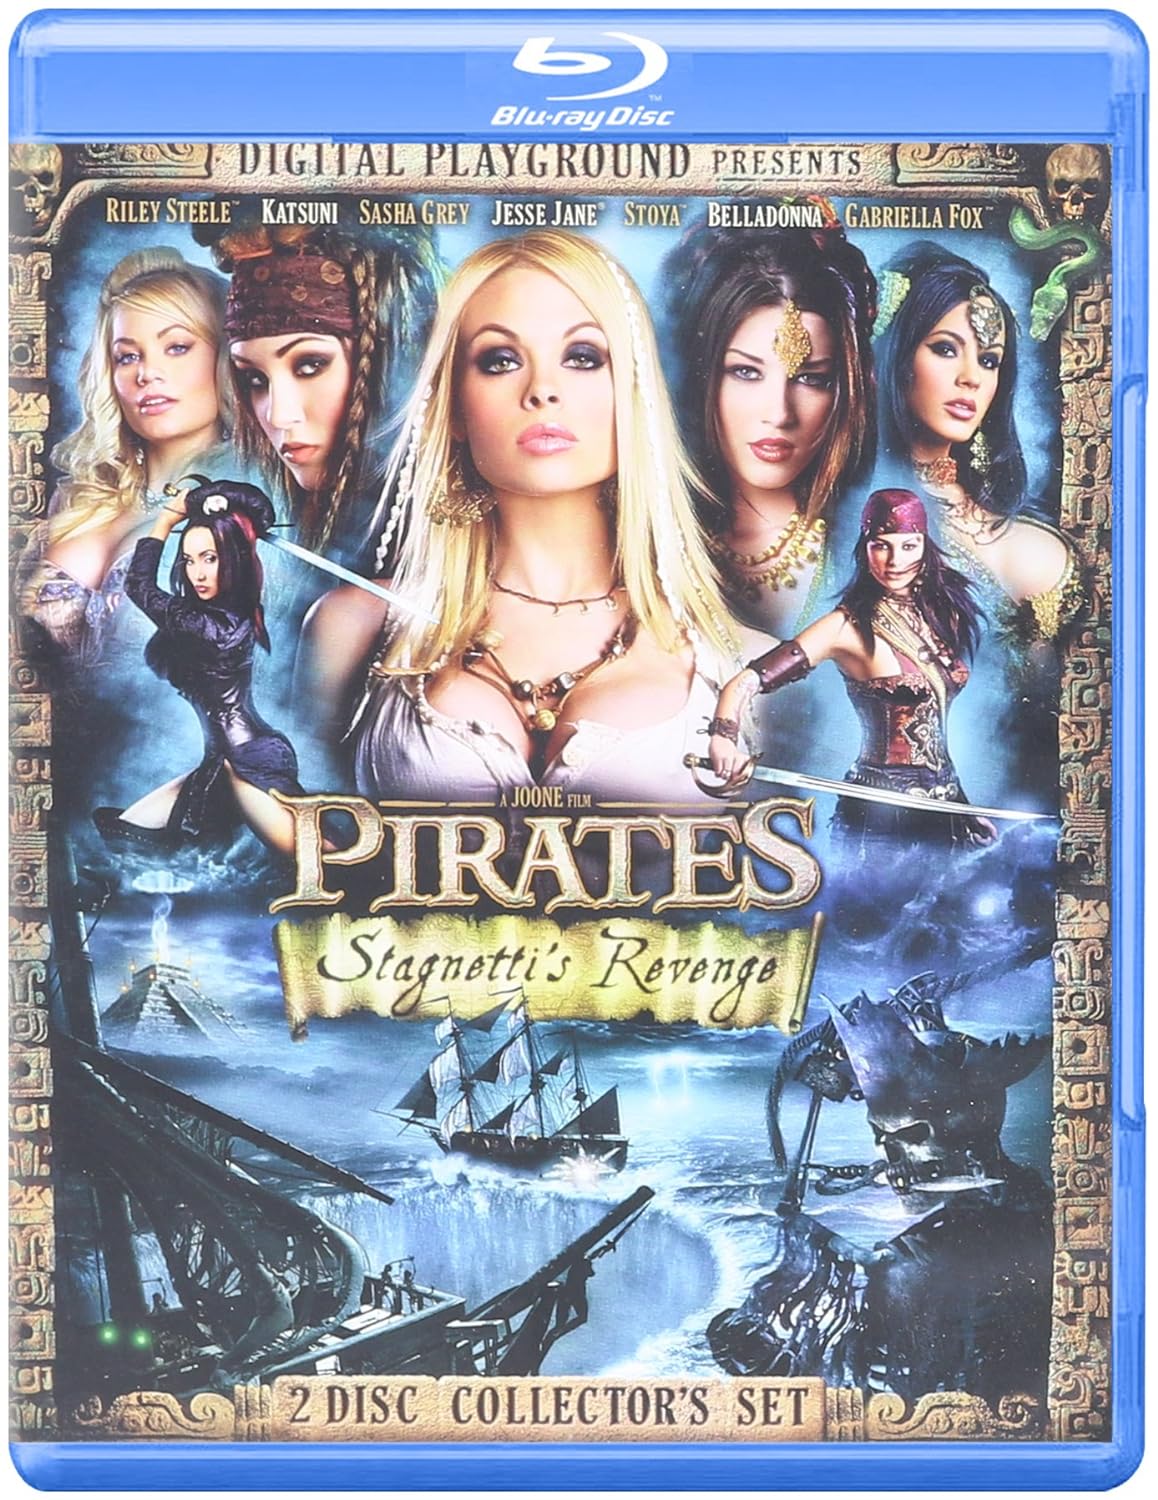 bona seo recommends Pirates 2 Sasha Grey